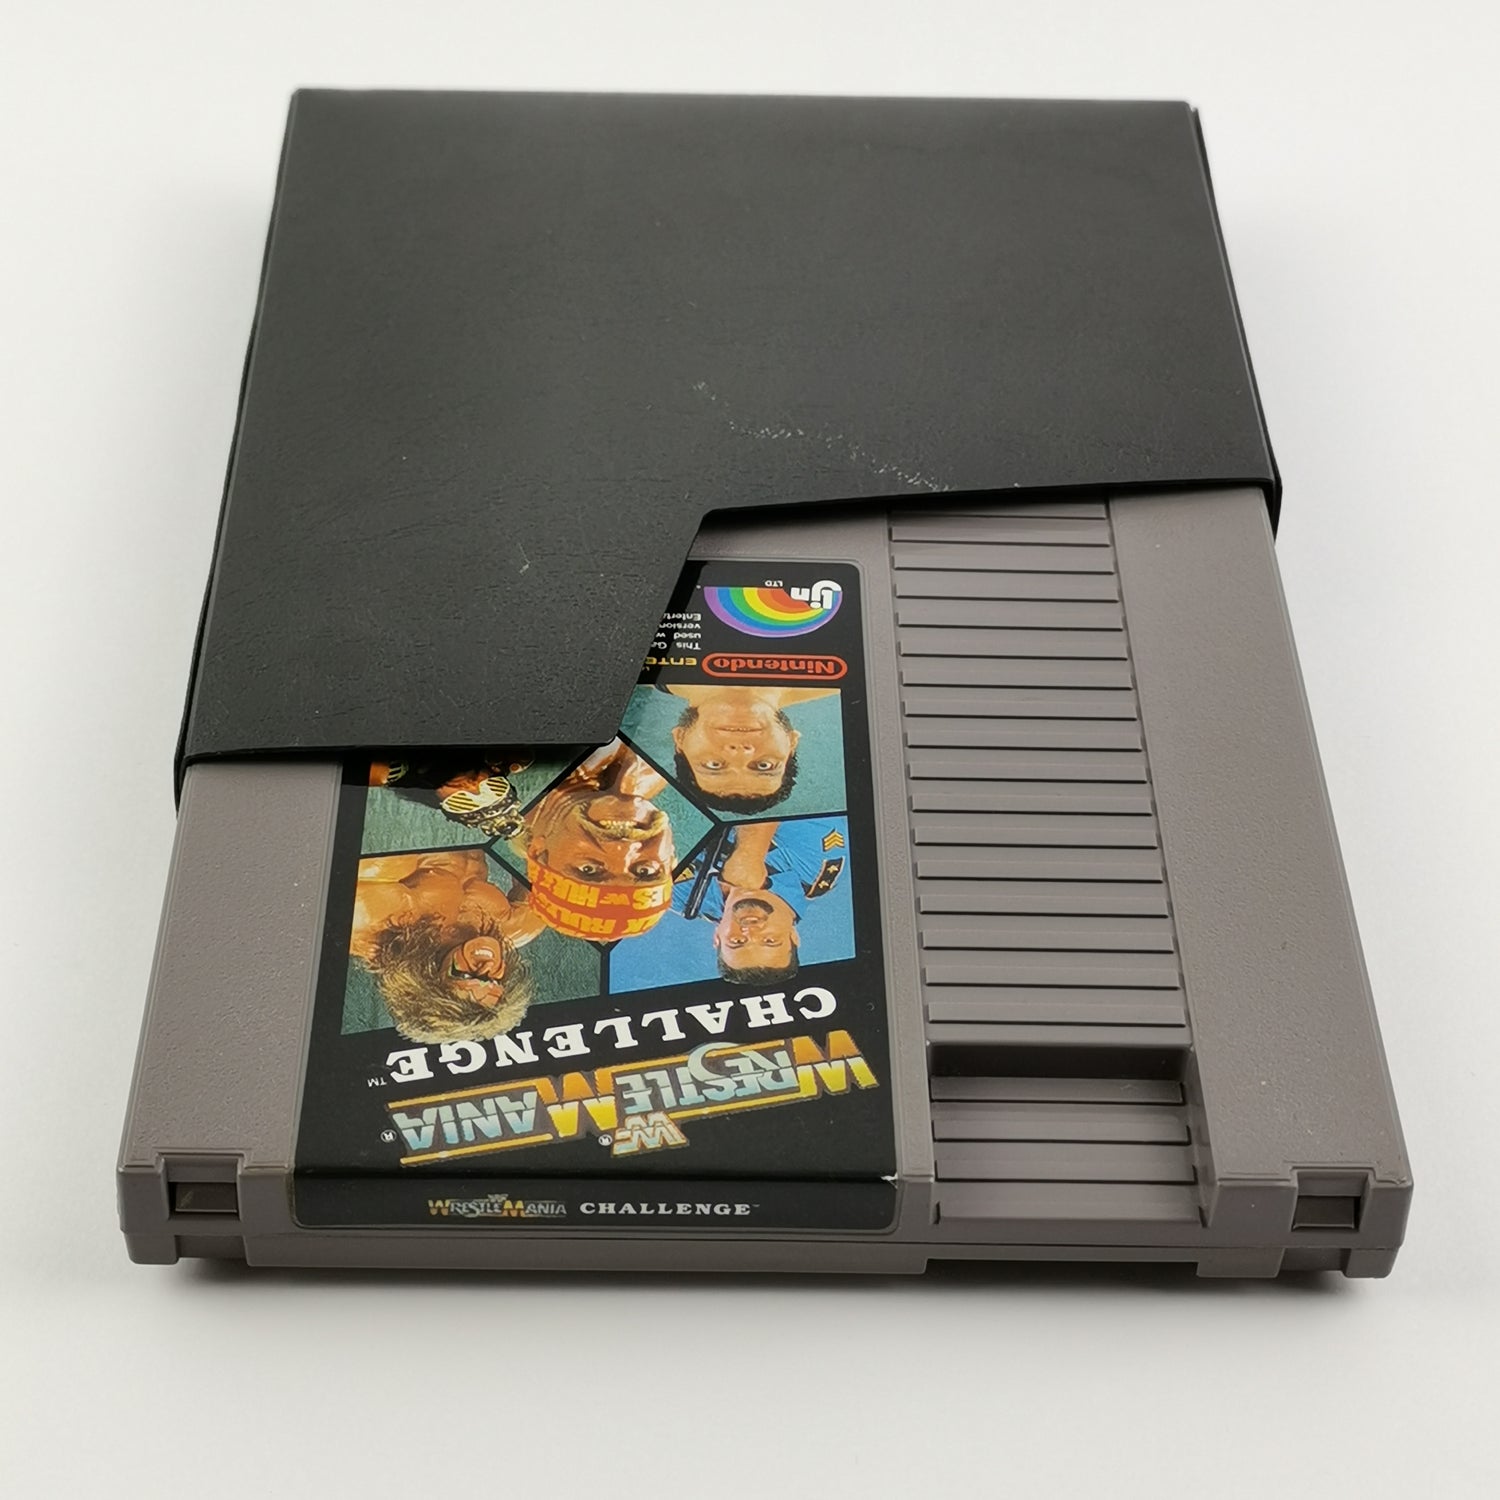 Nintendo NES Game: WWF WrestleMania Challenge - Module Cartridge | PAL FRG